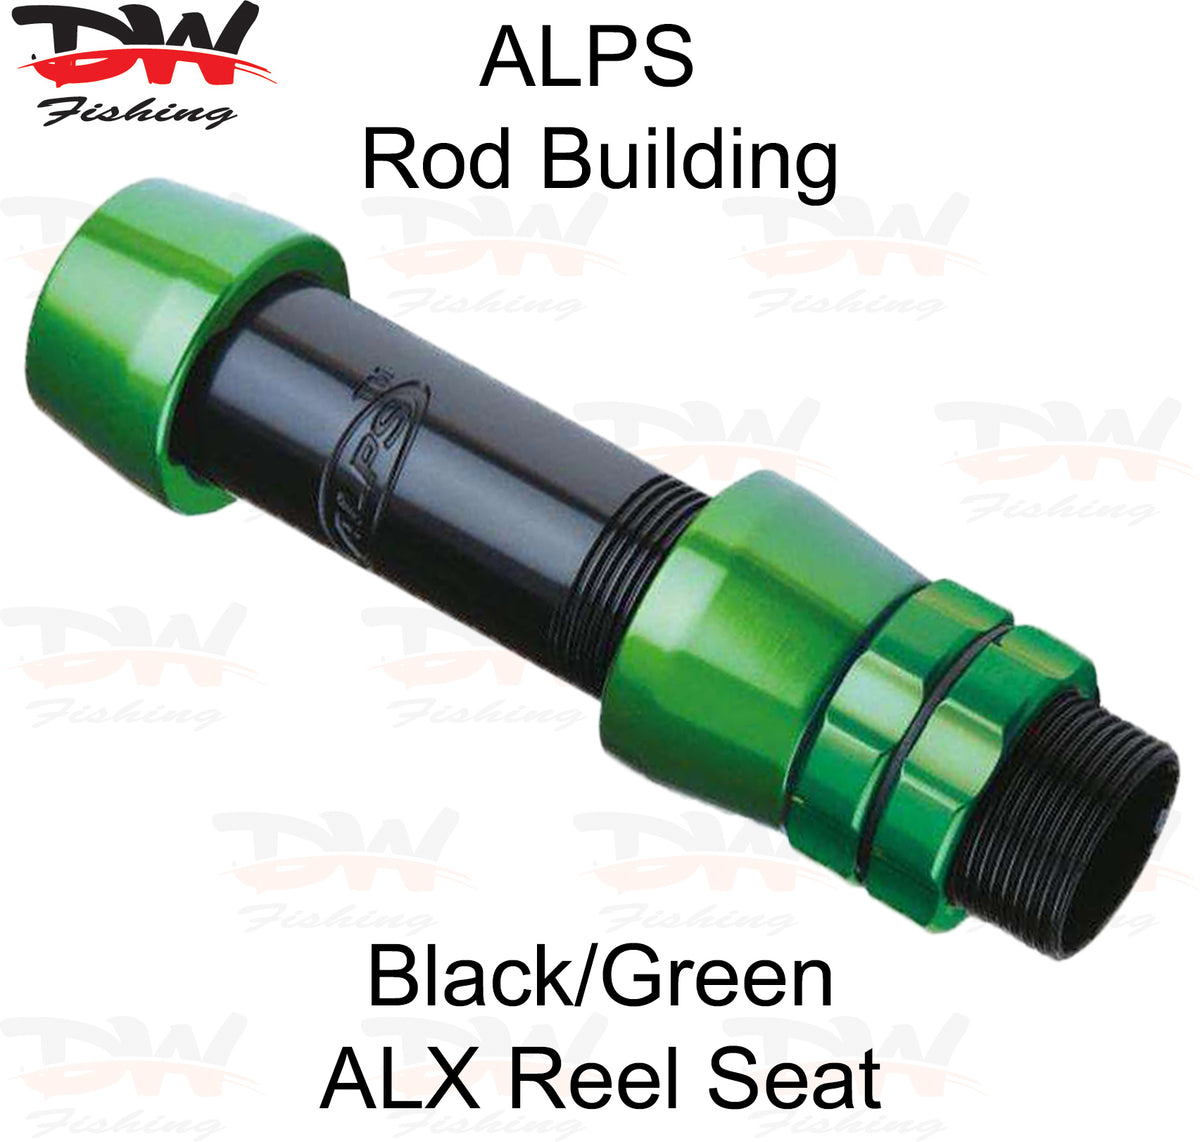 ALPS Reel Seat-AGB High Modulus Graphite Spin Reel Seat